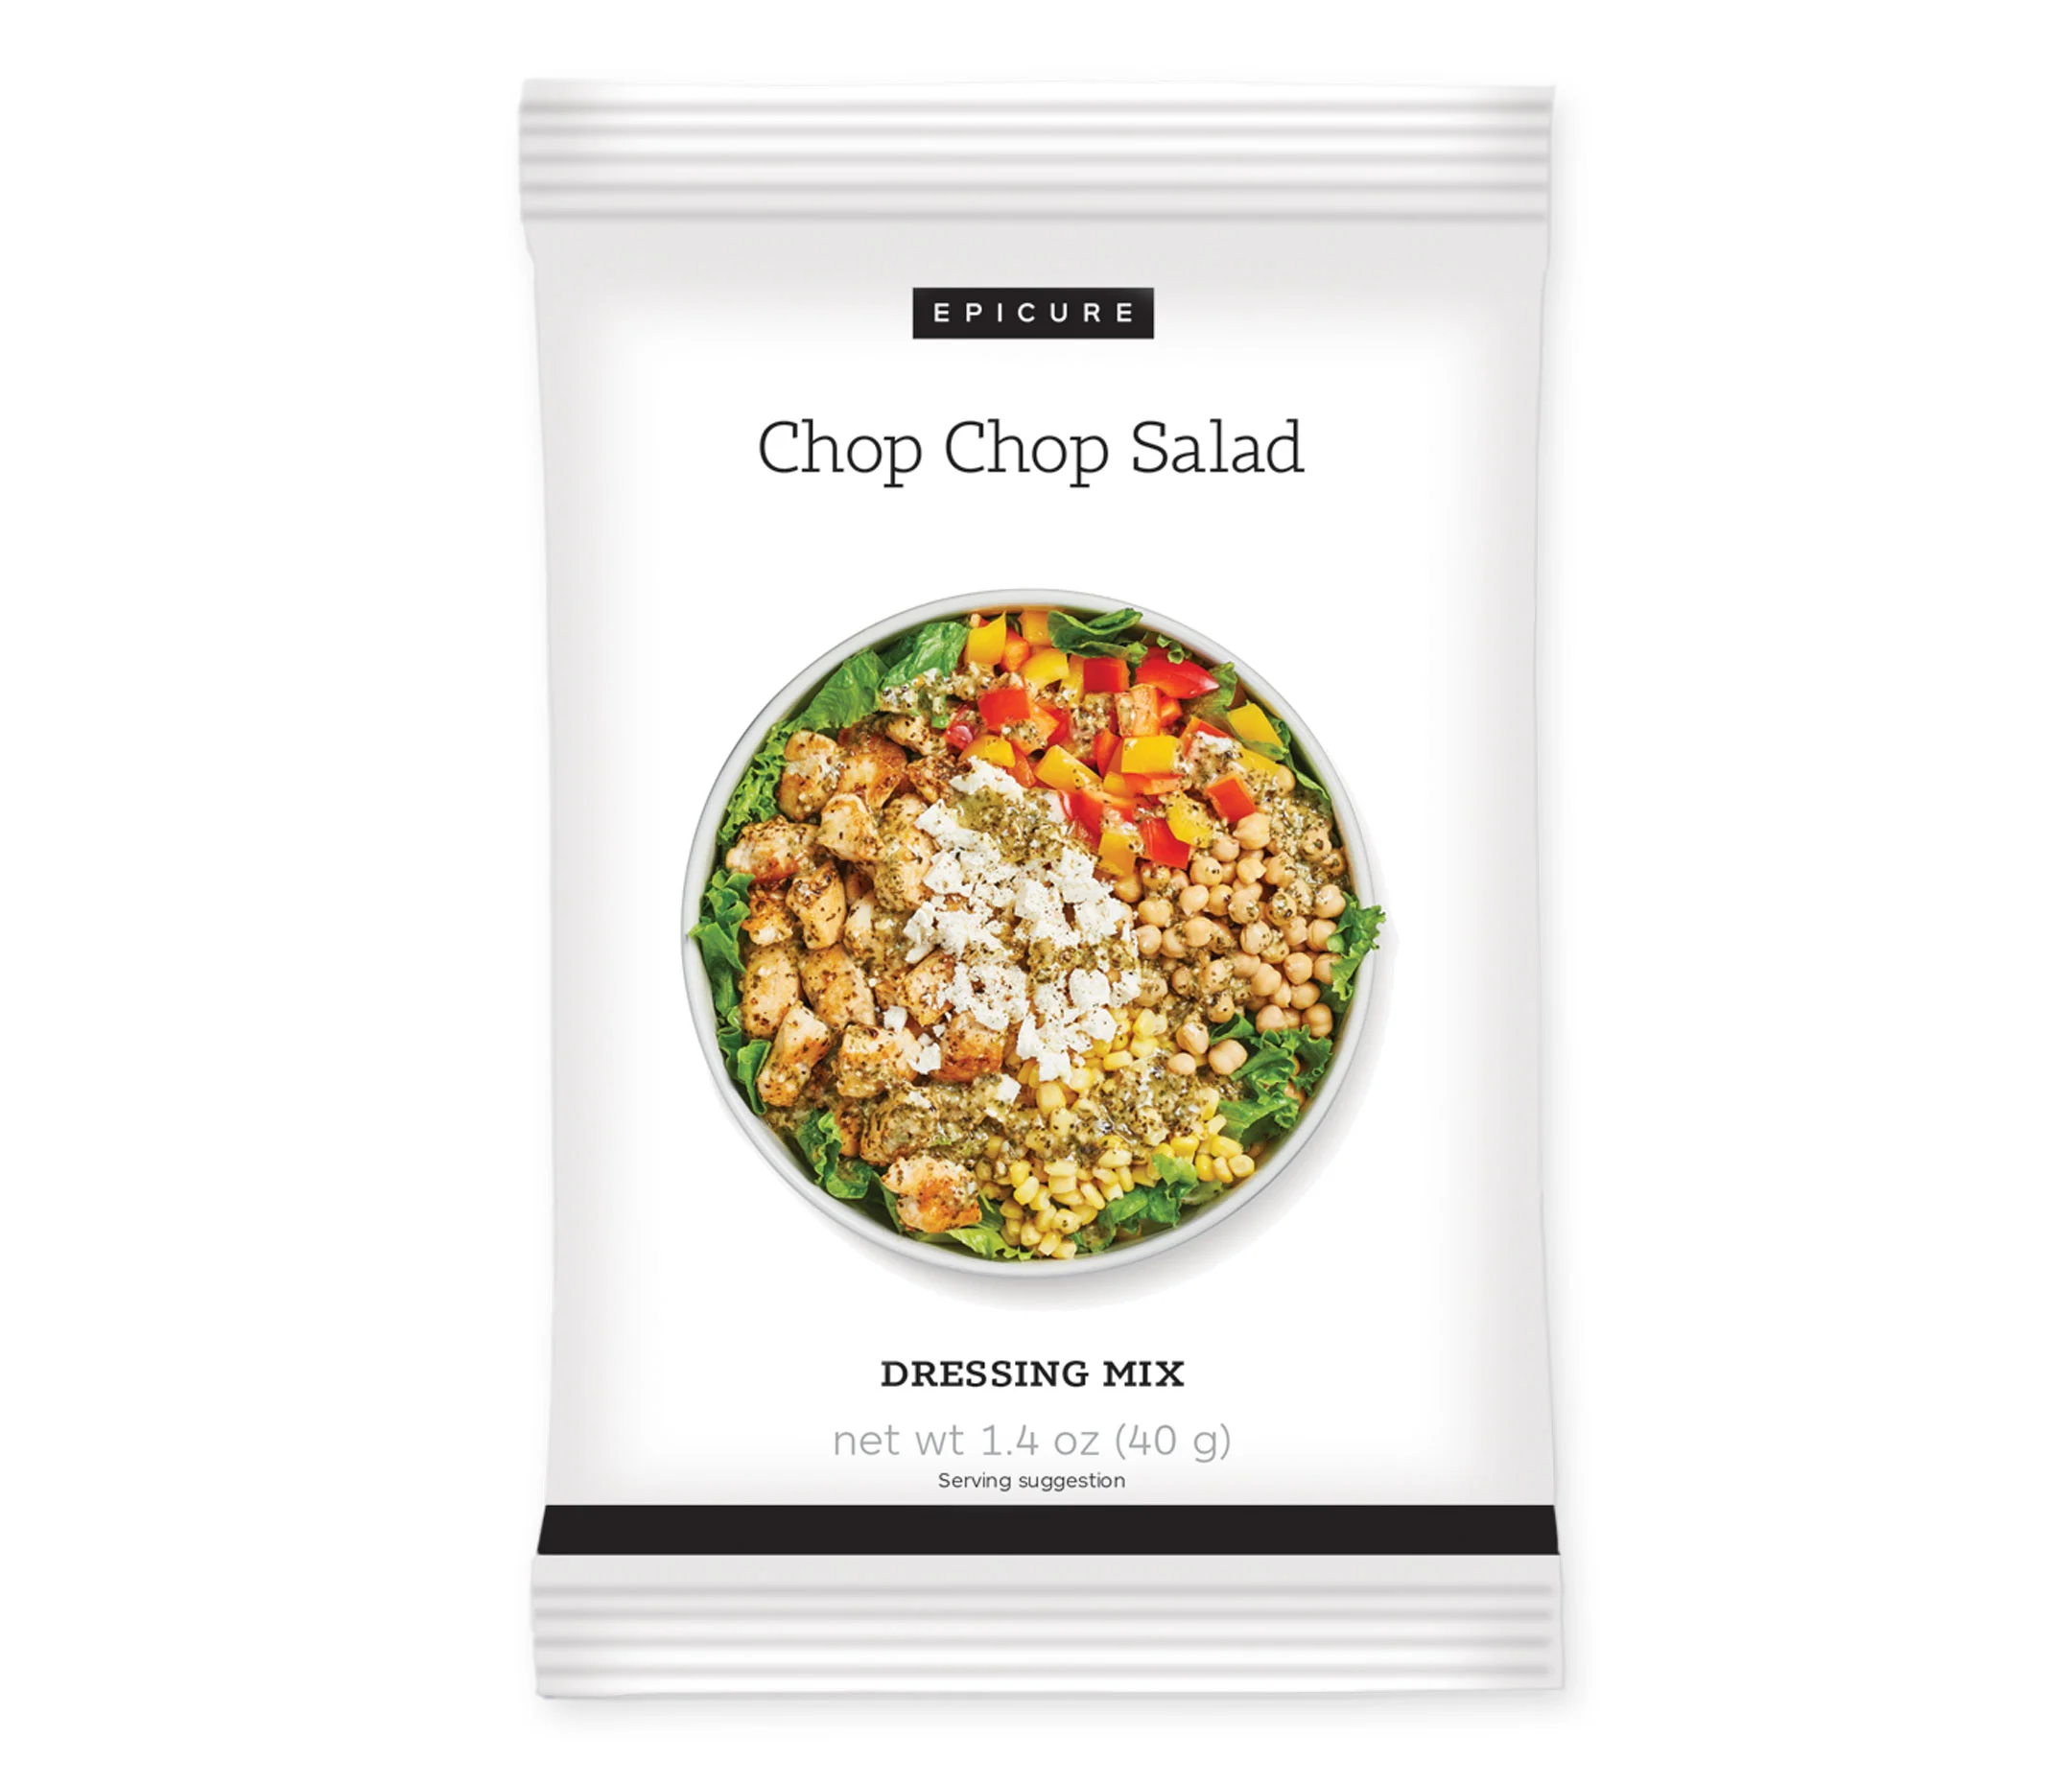 Chop Chop Salad Dressing Mix